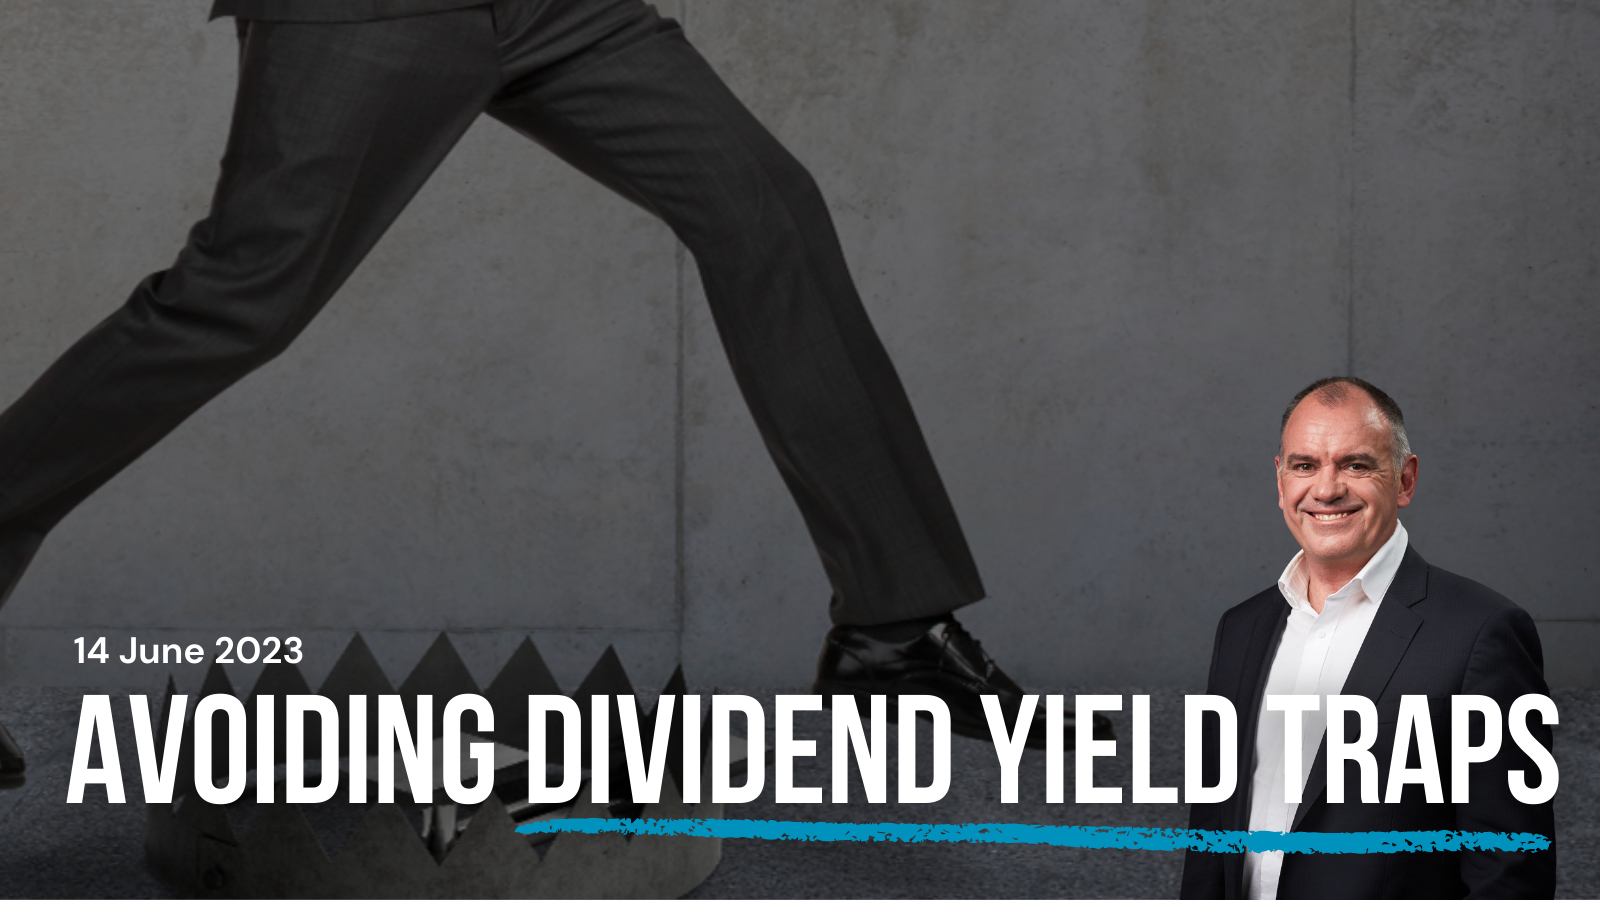 11. advoiding dividend yield traps